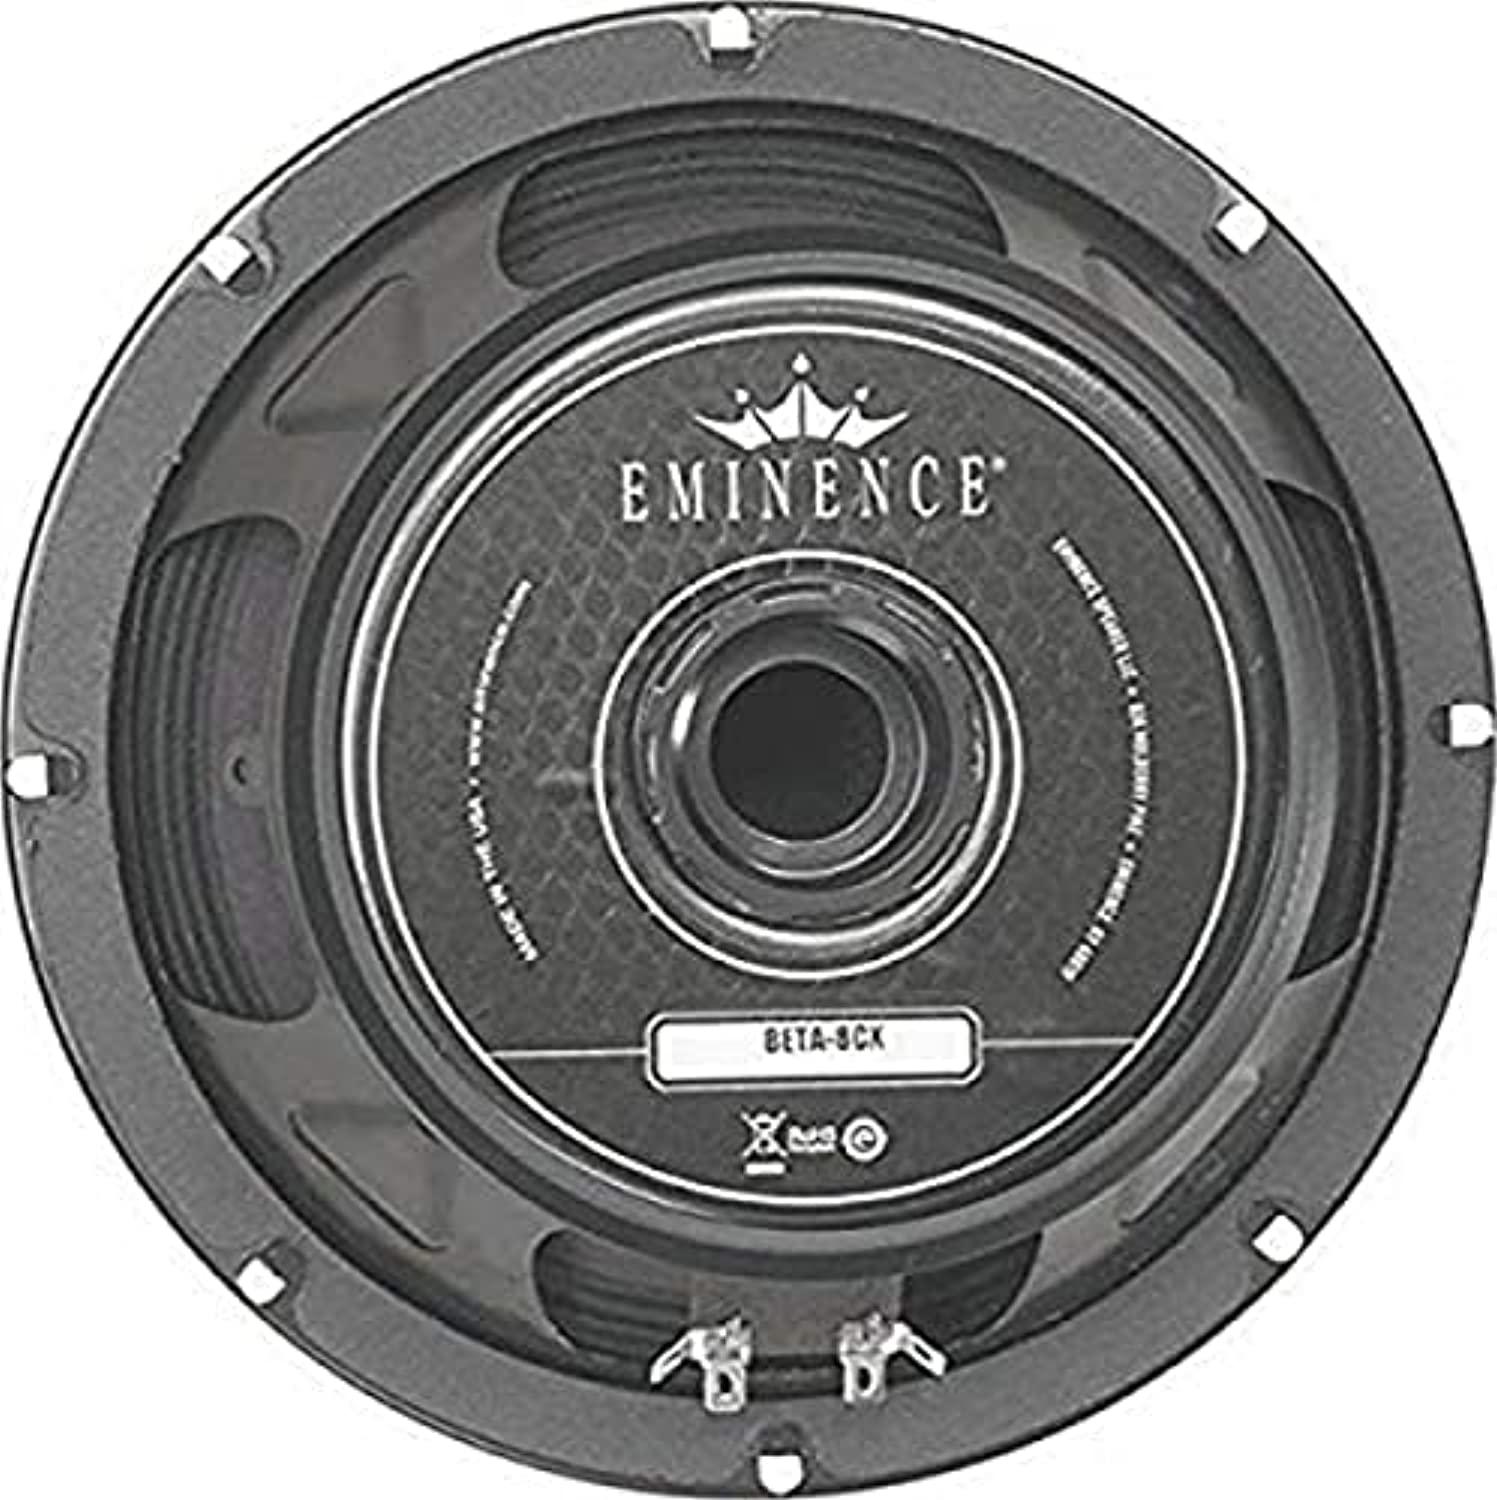 eminence beta8cx 8-inch american standard series speakers